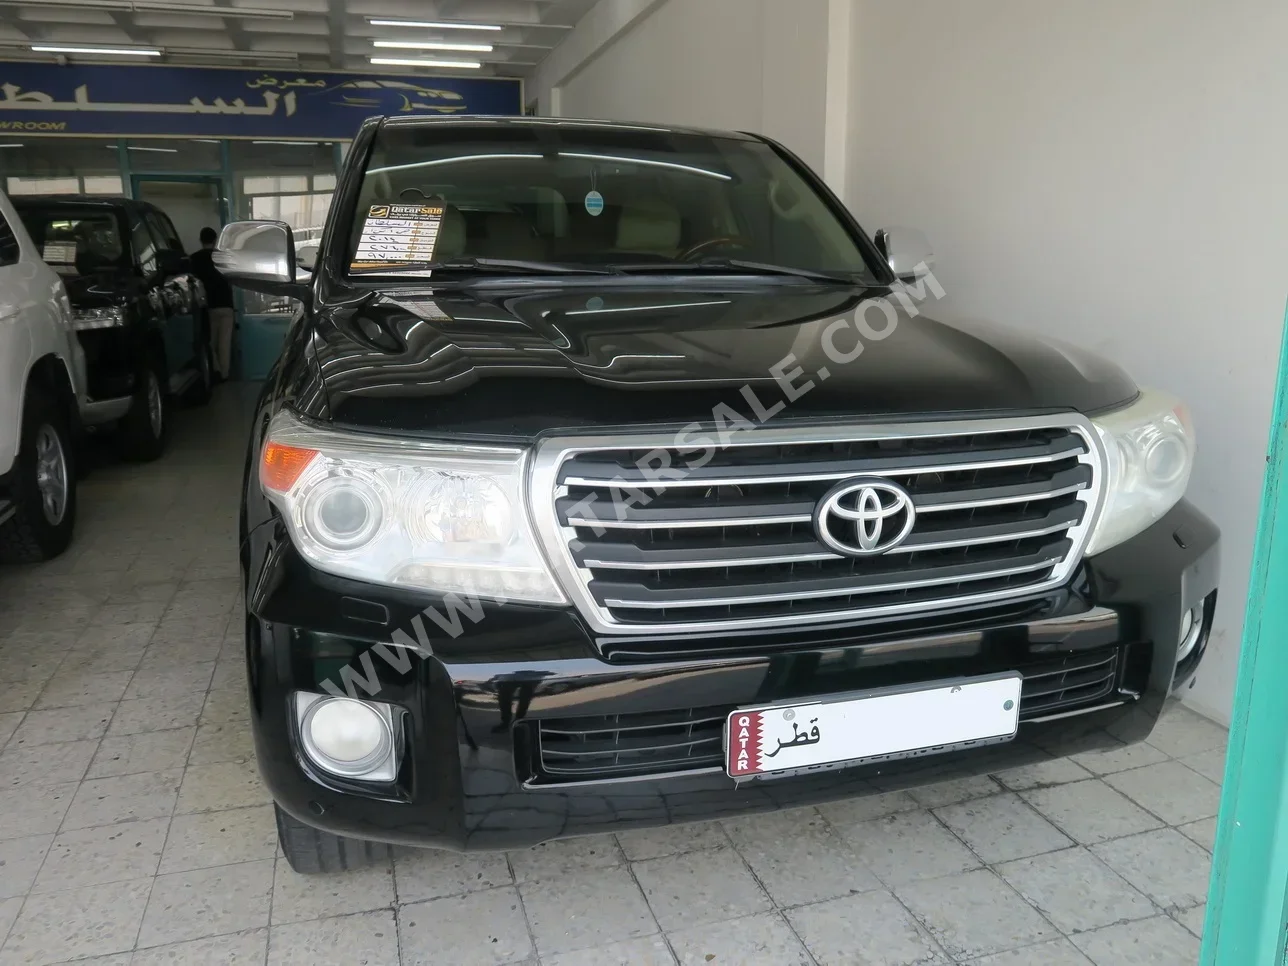 Toyota  Land Cruiser  GXR  2014  Automatic  276,000 Km  8 Cylinder  Four Wheel Drive (4WD)  SUV  Black